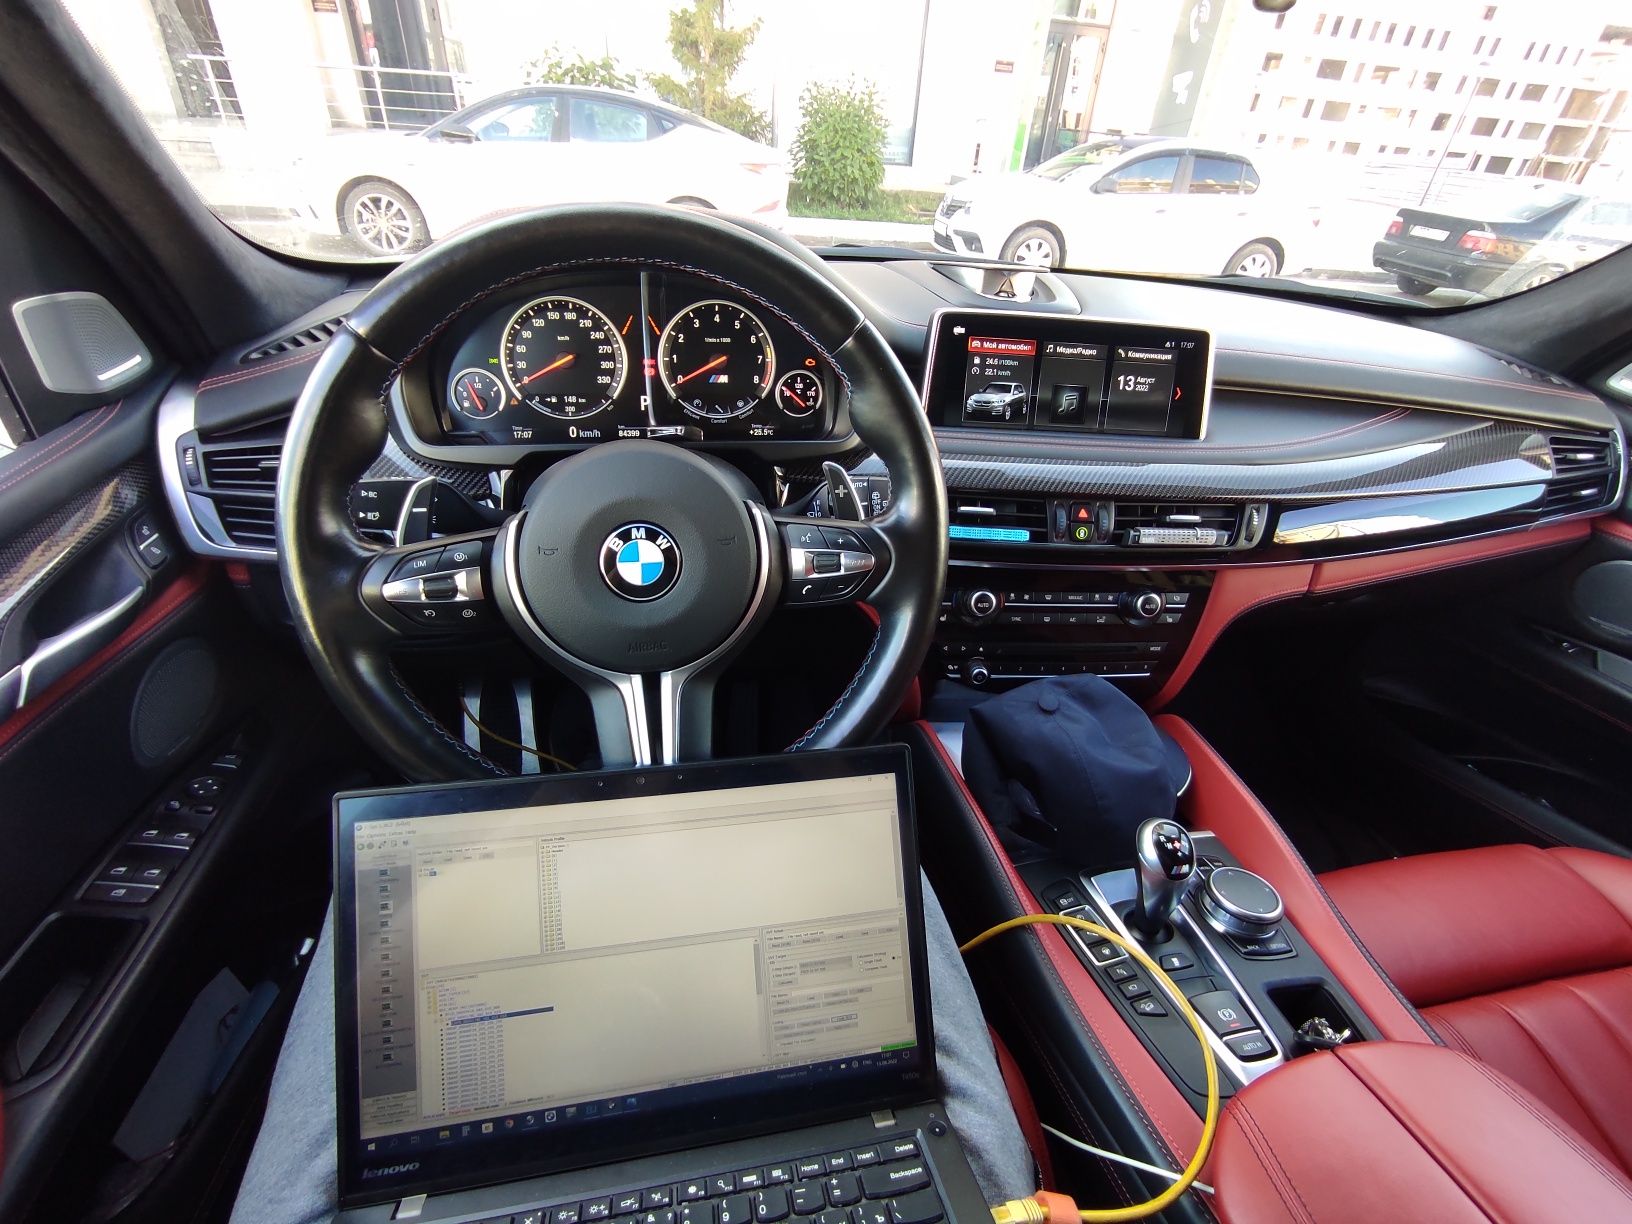 BMW Евро 0-2 / кодирование, прошивка, диагностика E, F, G серий